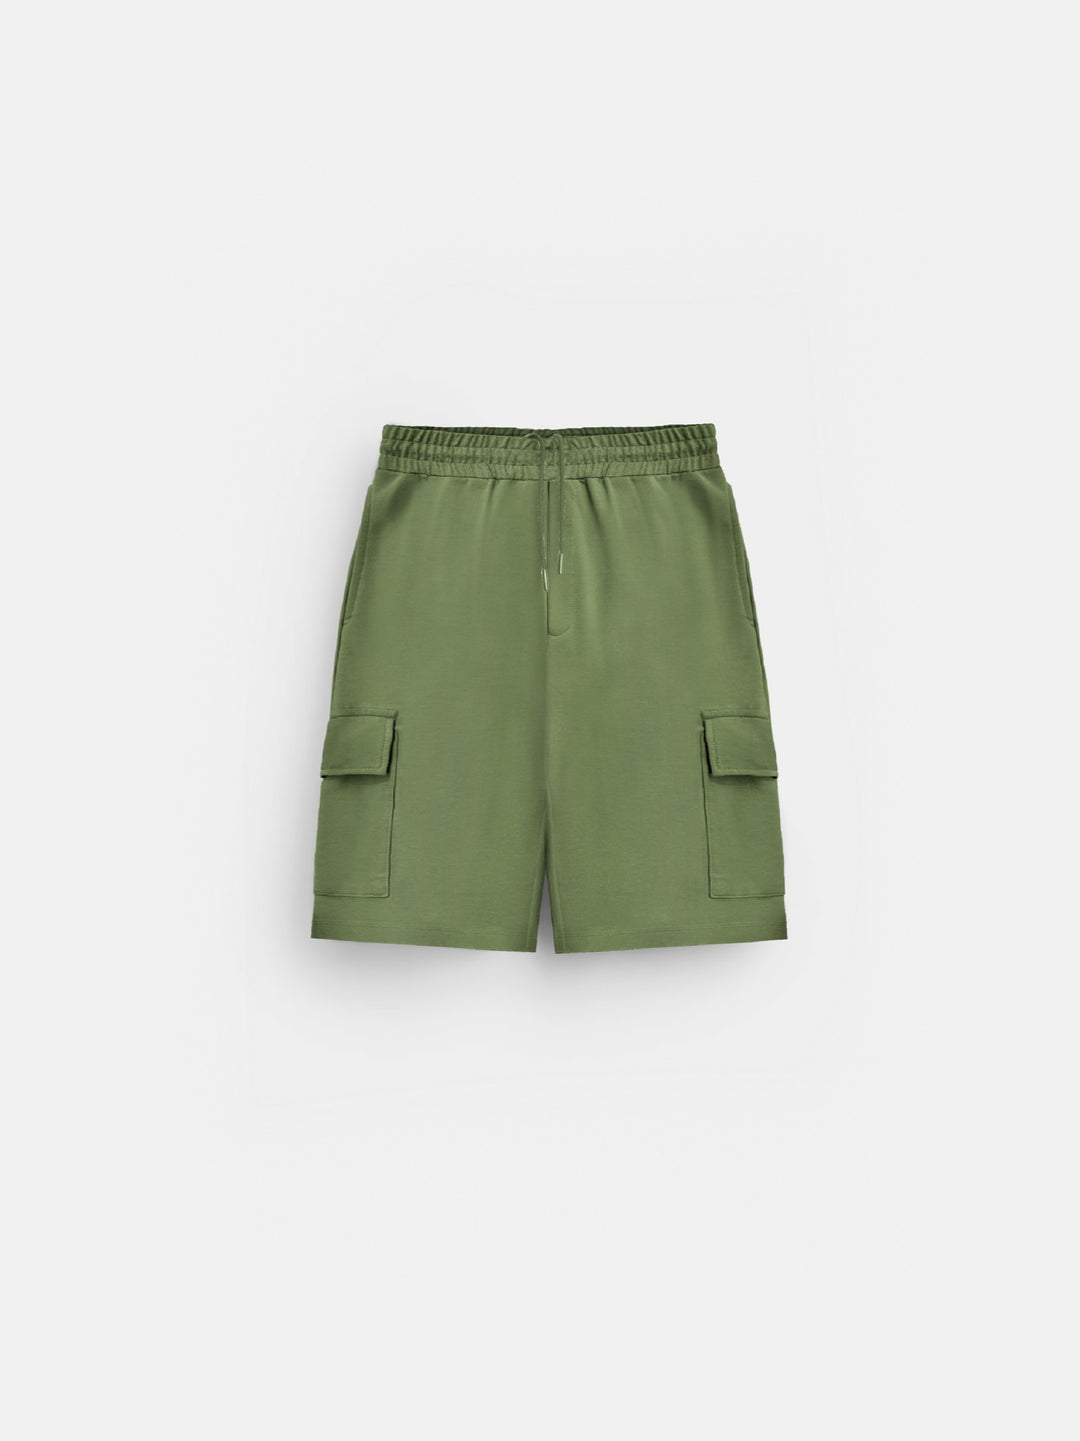 Loose Fit Pocket Shorts - Grass